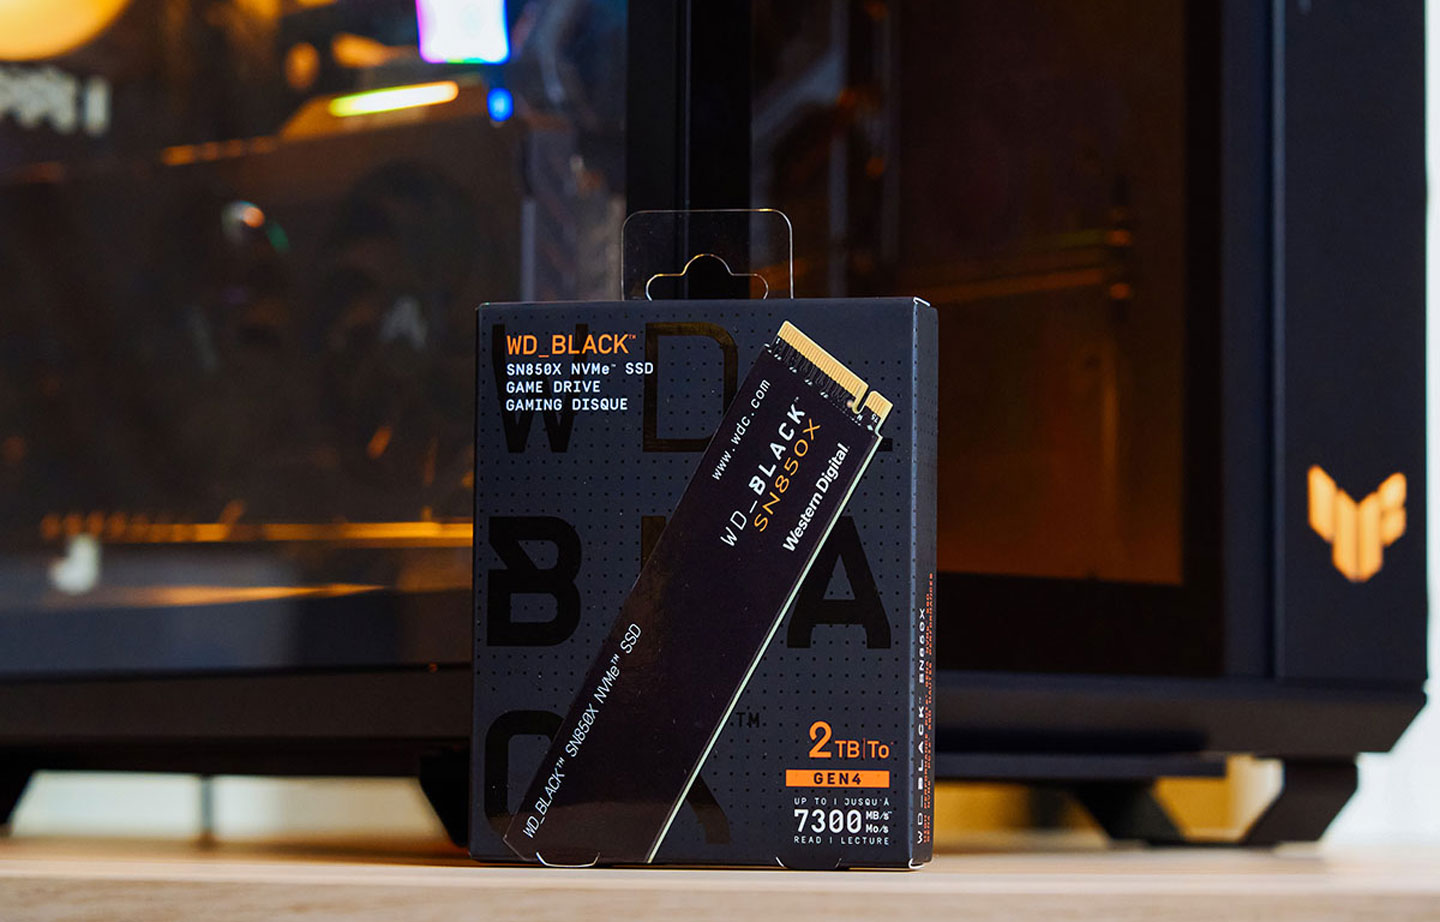 WD_BLACK SN850X NVMe SSD 外盒包裝面，全黑色計非常符合產品名稱的「主題性」。